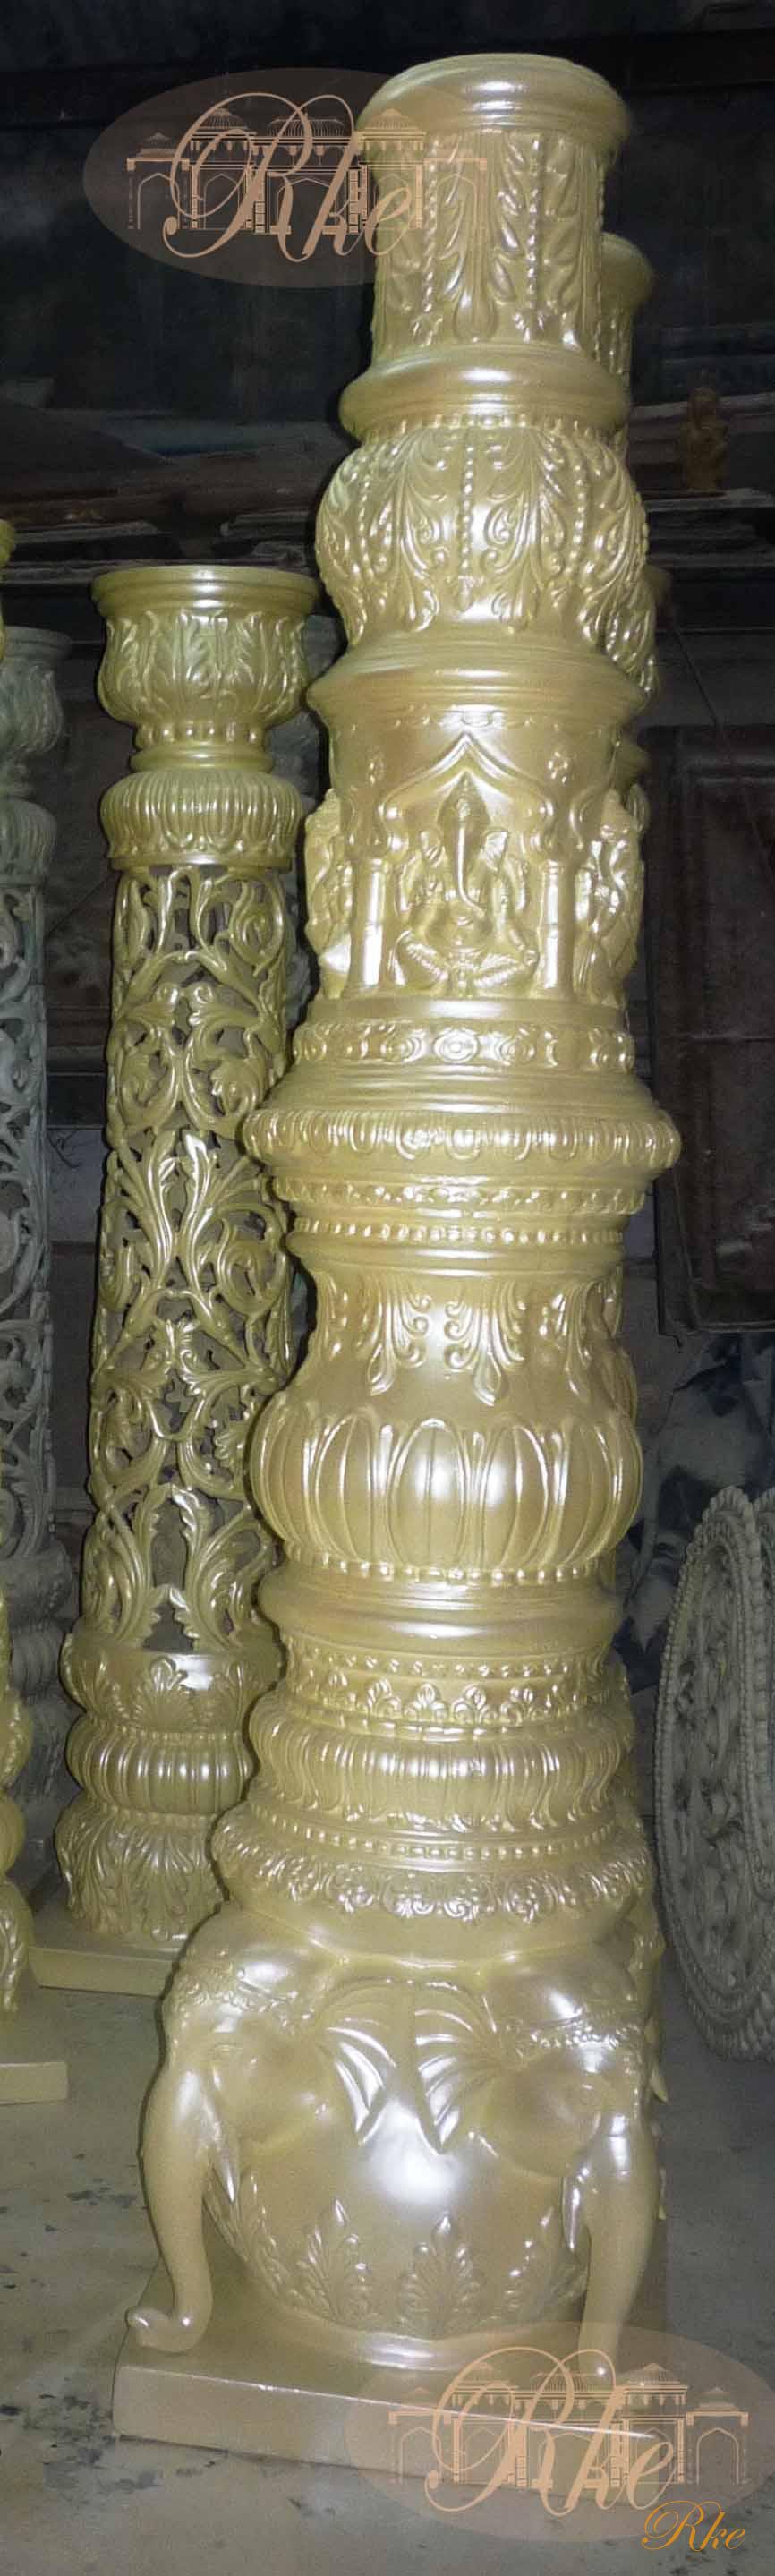 biyer mandap pillar like elephent task design with sitting ganesha statue for spiritual mandap design for wedding of hindus